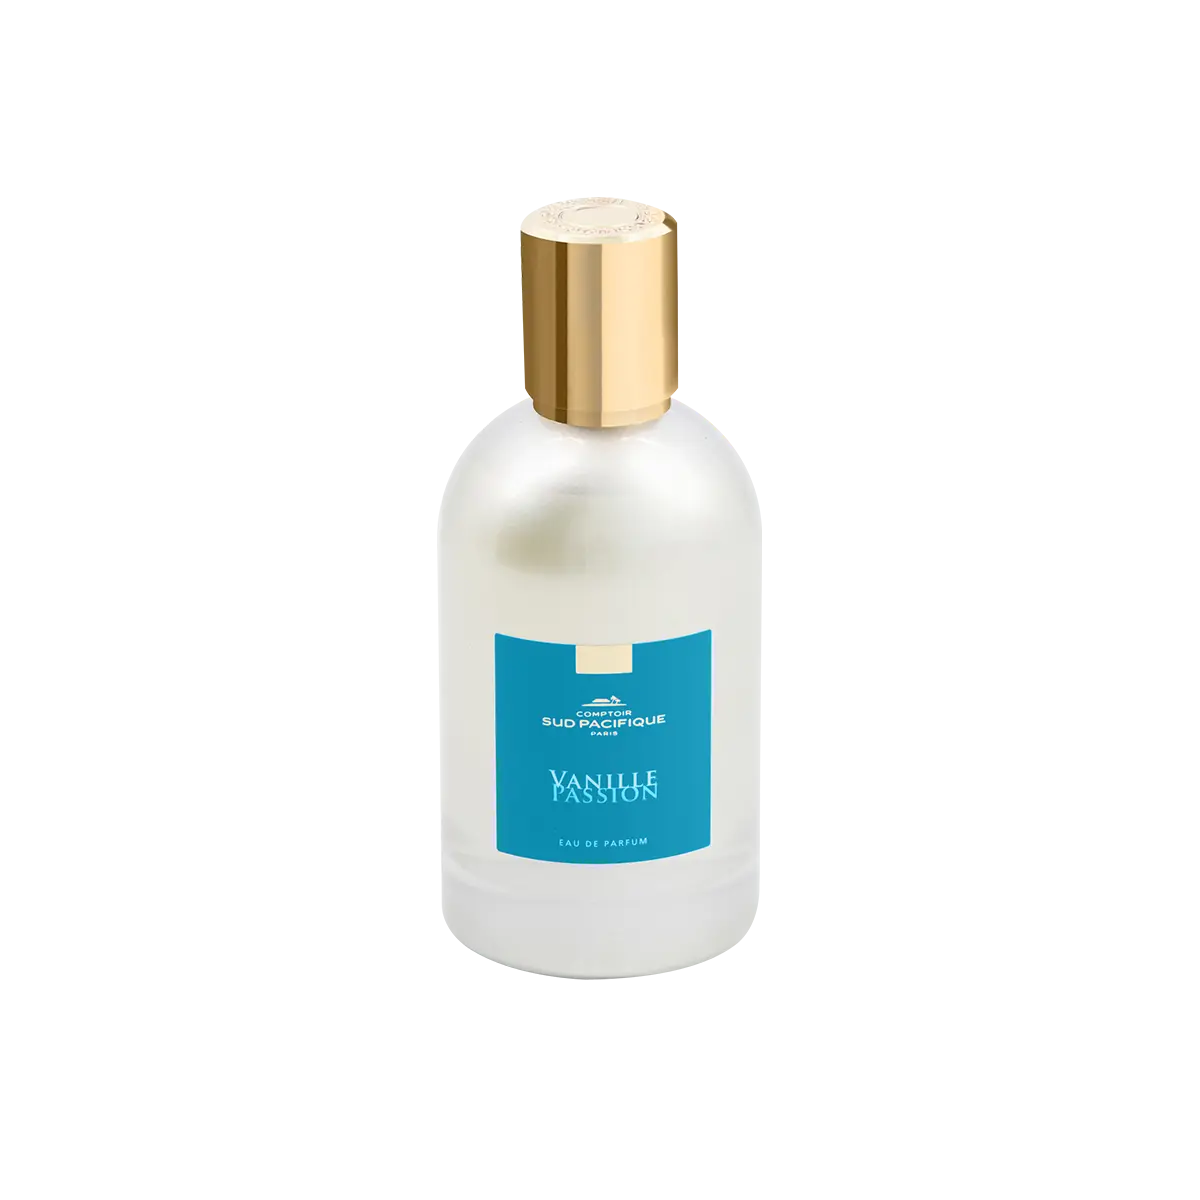 Comptoir sud pacifique Vanille Passion perfume - 100 ml